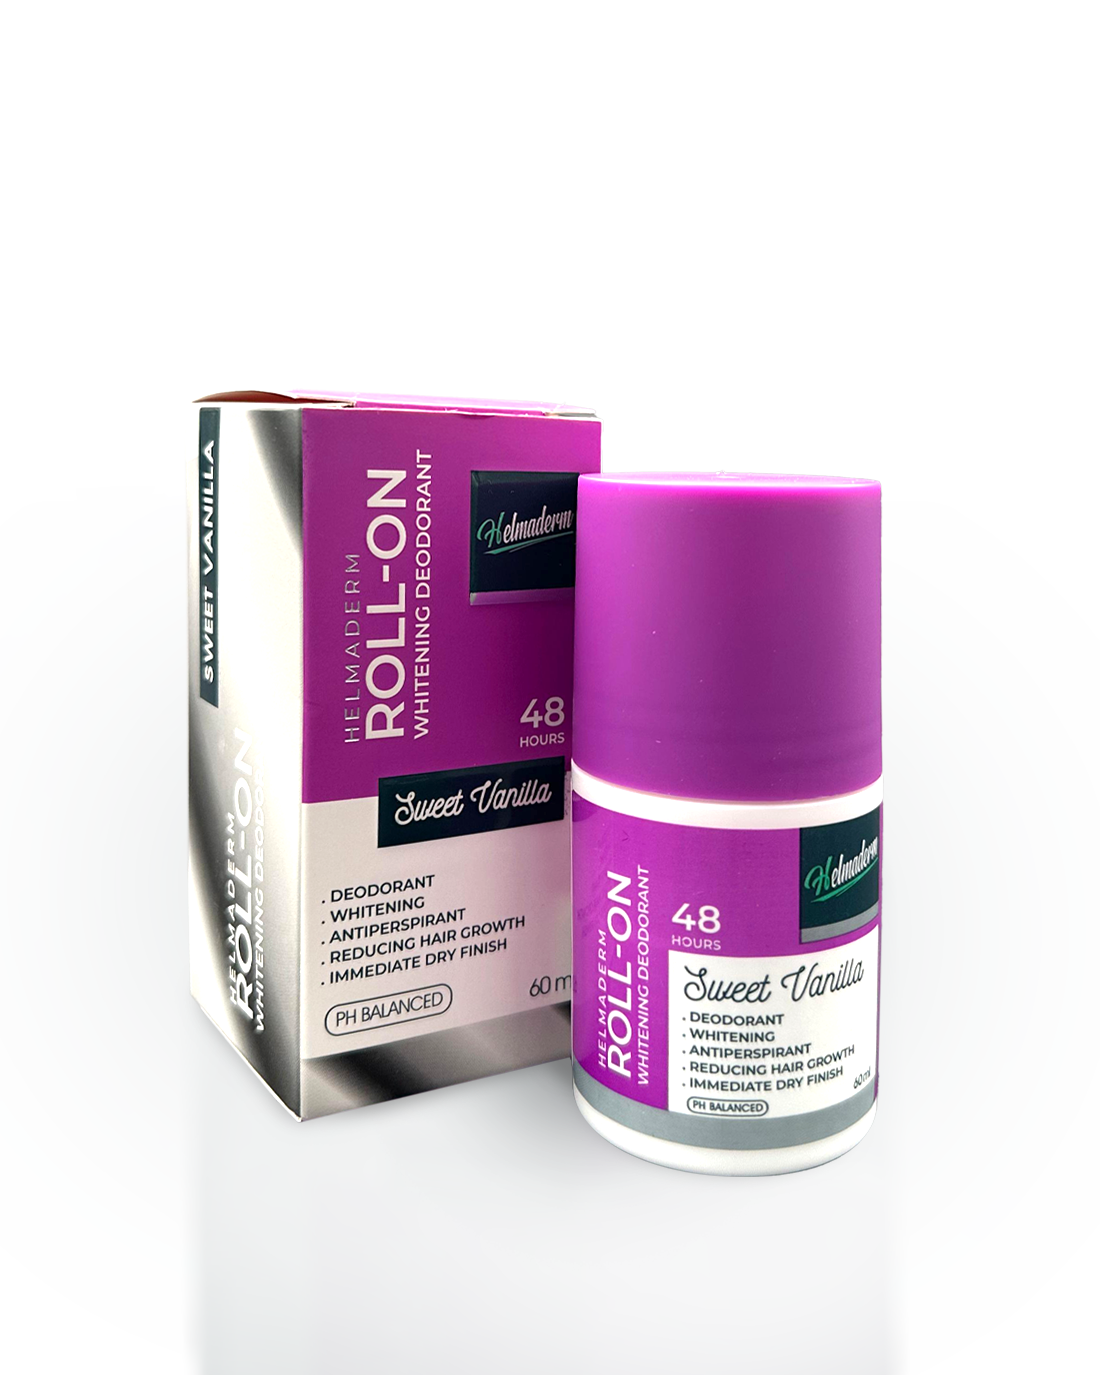 Helmaderm Deodorant Whitening Roll-on Hair Reducer With Sweet Vanilia 60ml